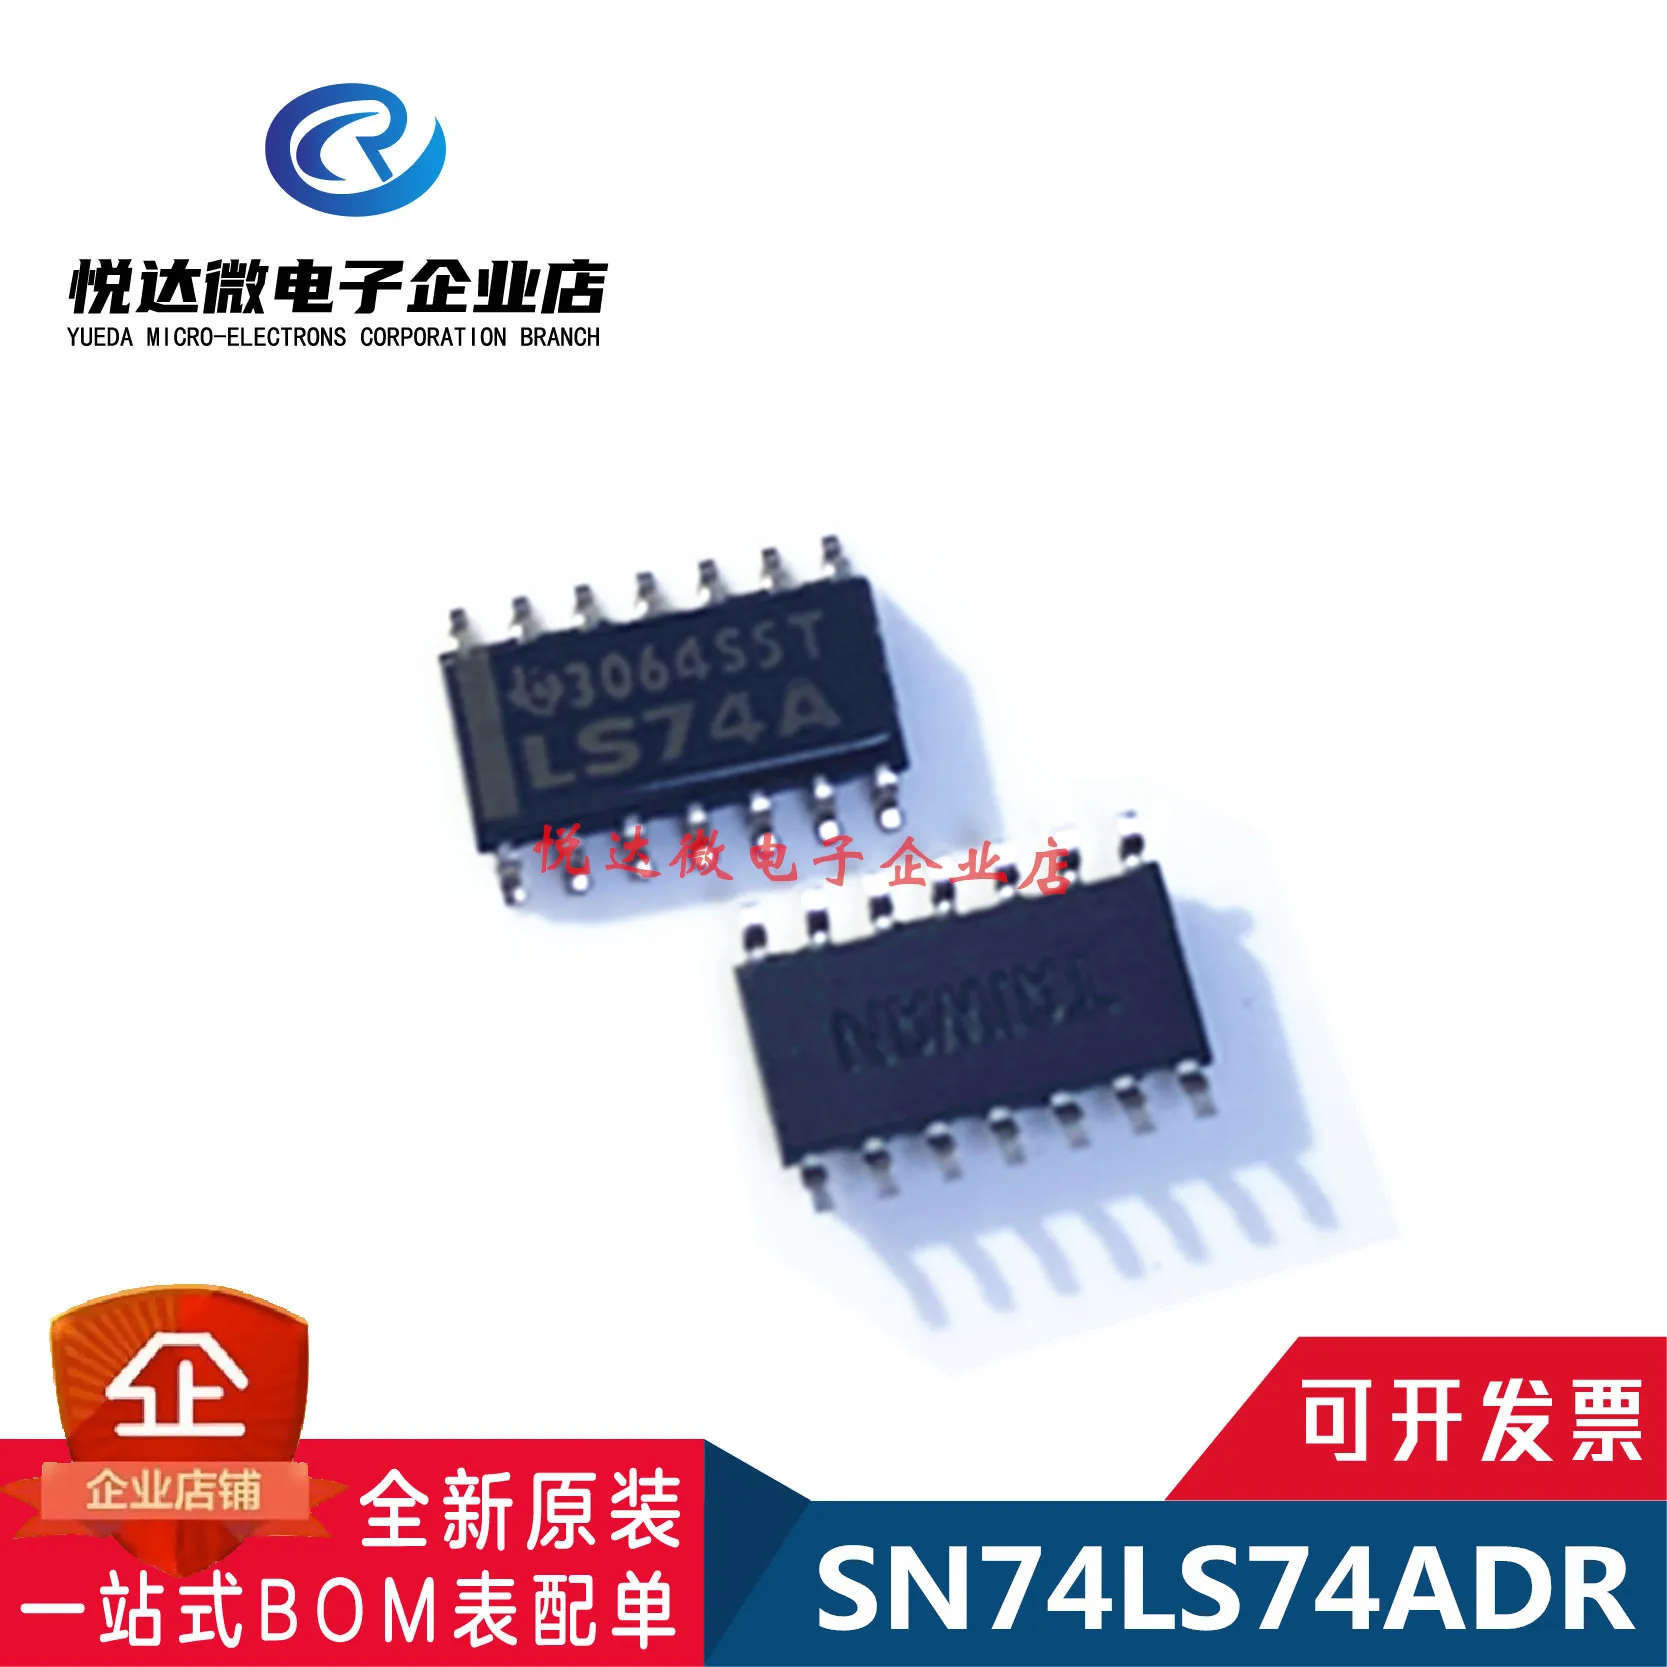 

10 Pcs/Set Polouta SN74LS74ADR SOP-14 3.9mm SMD Trigger Electric Acoustic Components Kits Arduino Nano Integrated Circuit